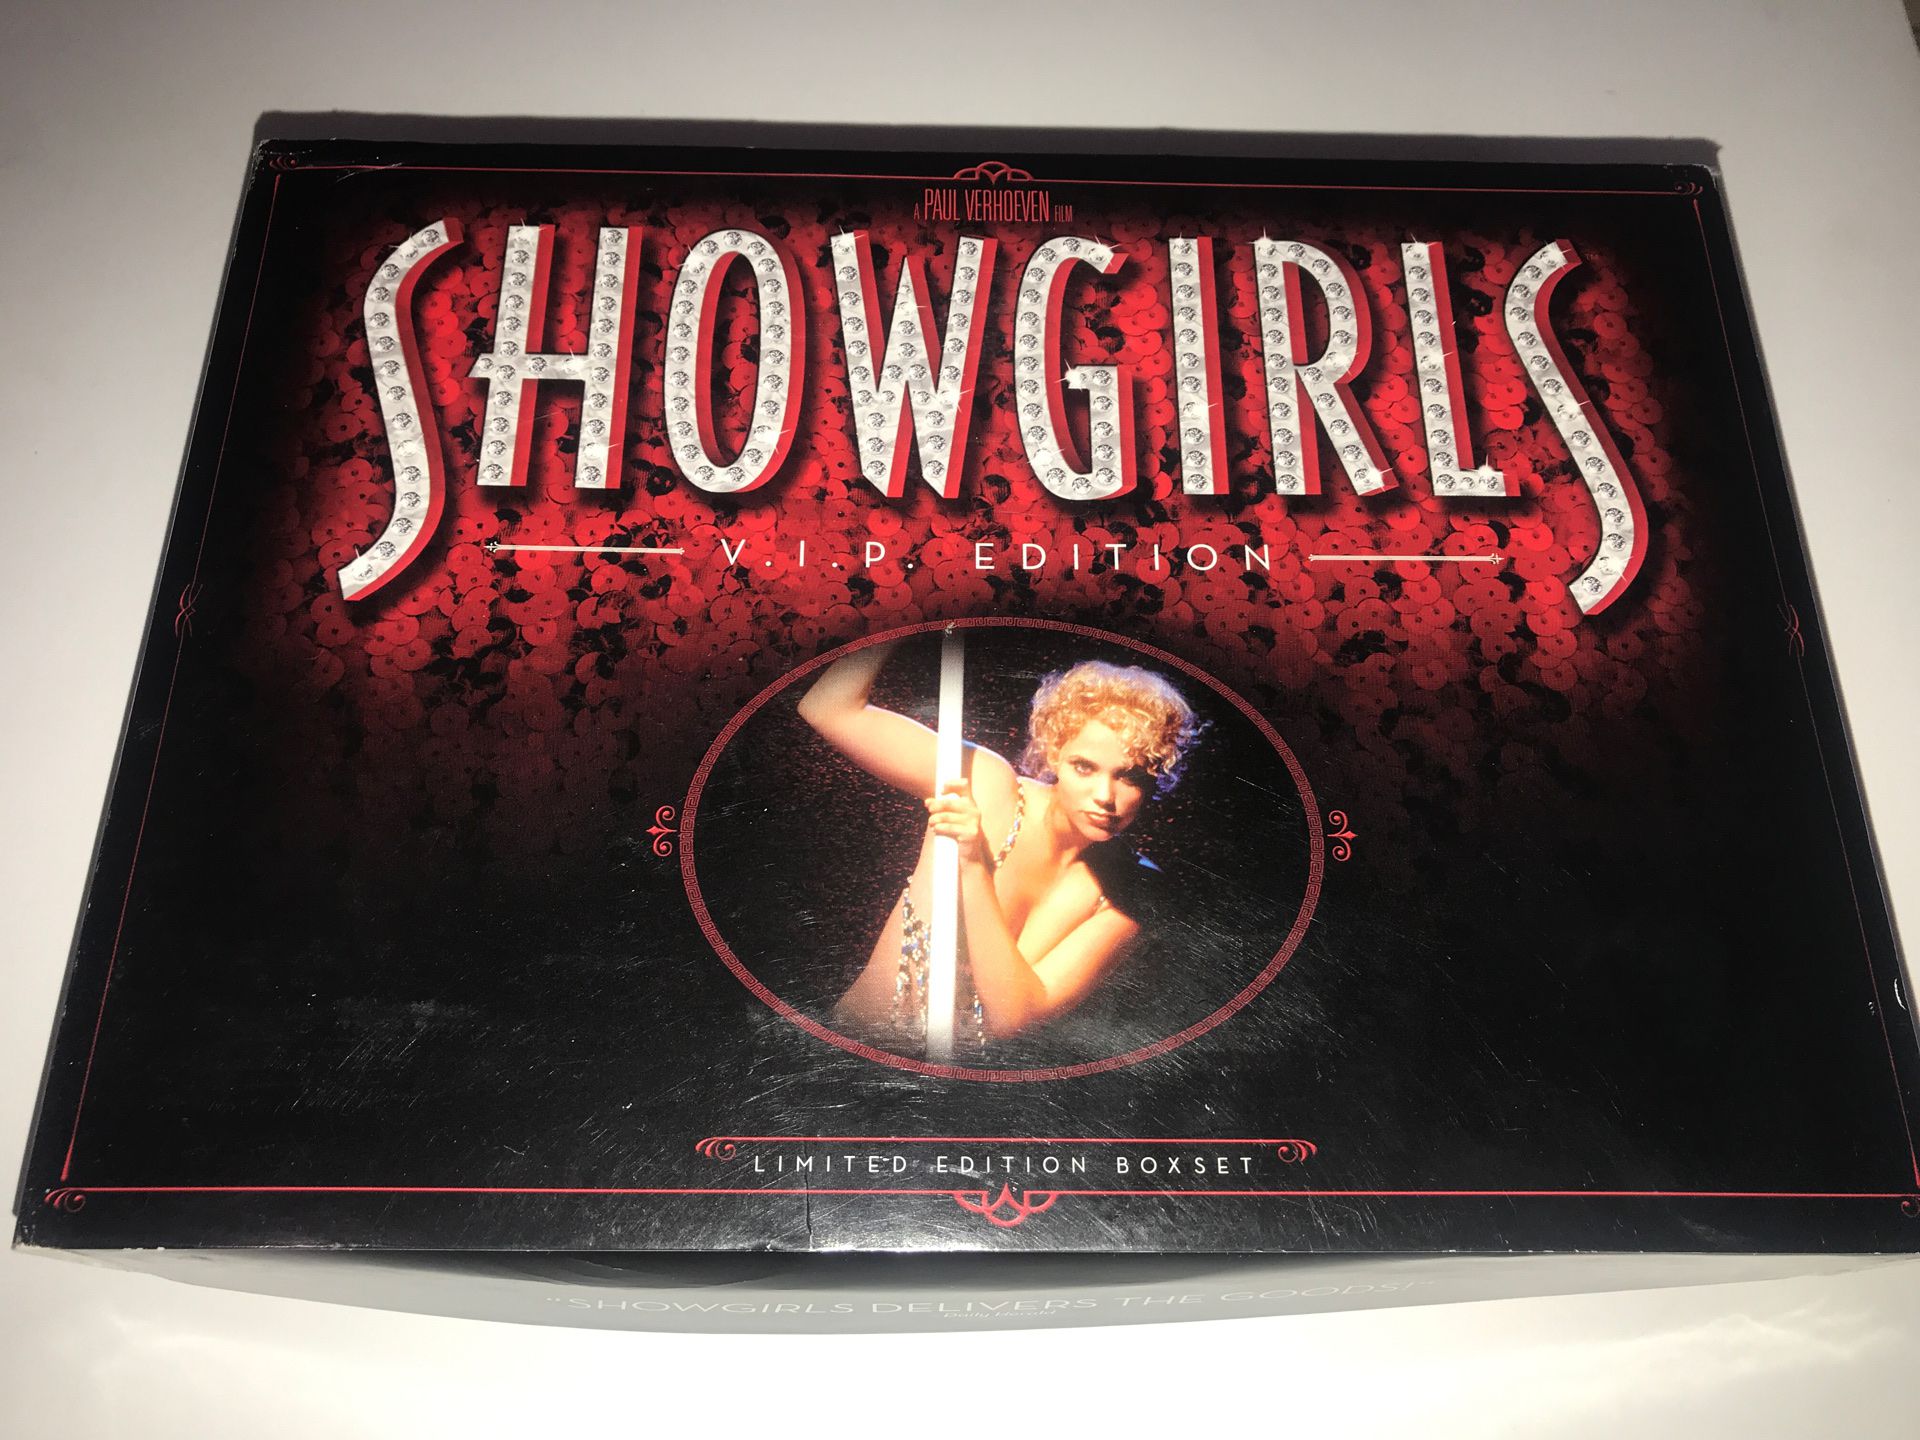 Showgirls VIP Edition Dvd box set